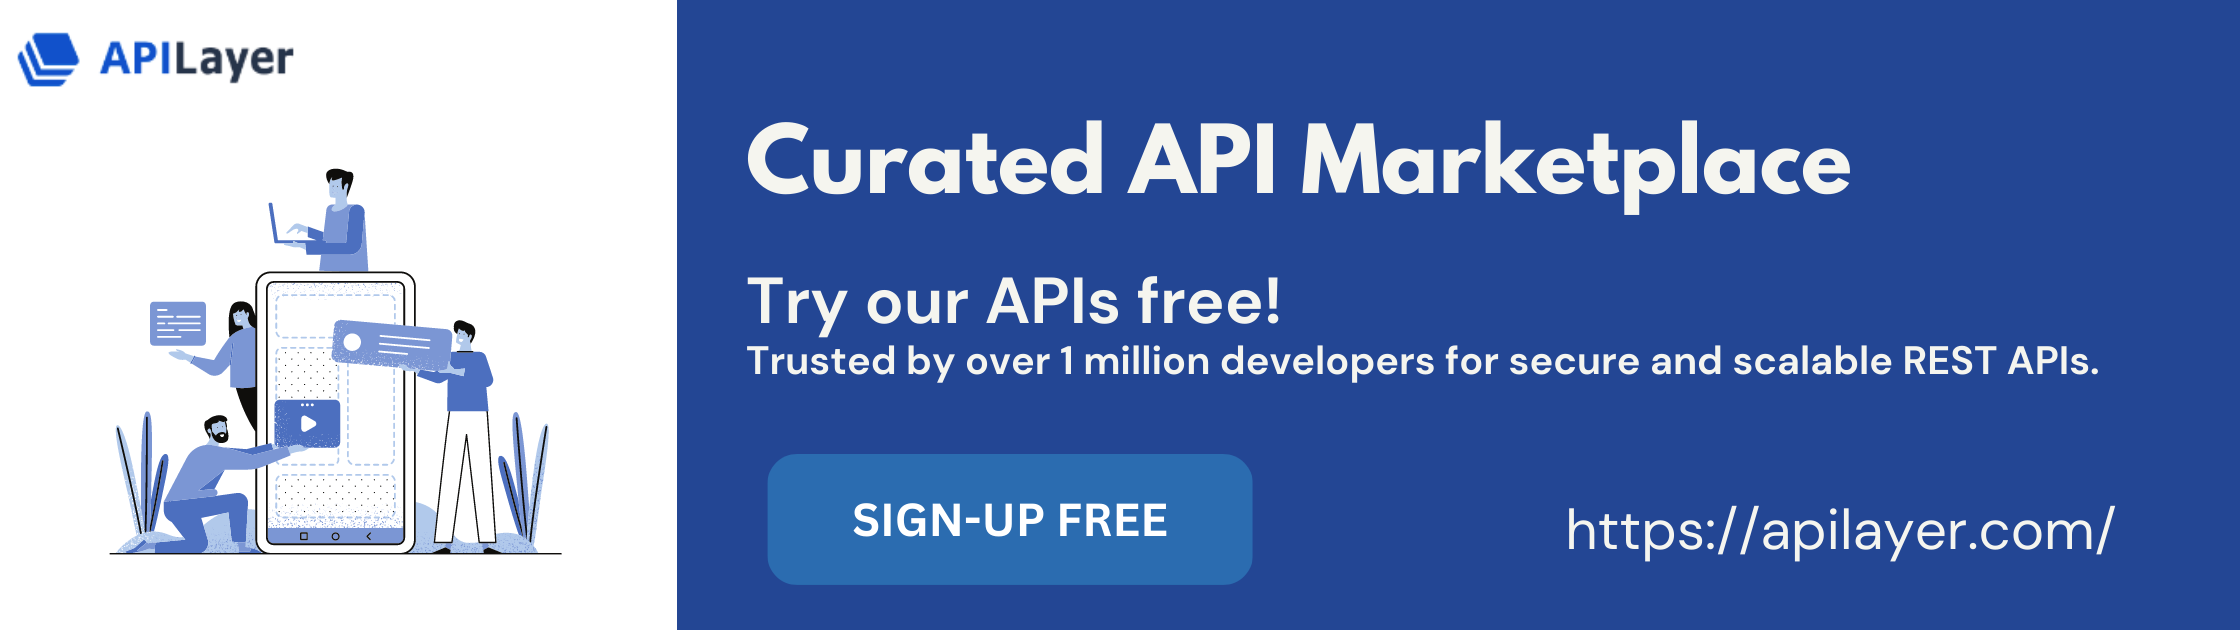 APILayer CTA Banner - Sign-Up Free for API Marketplace